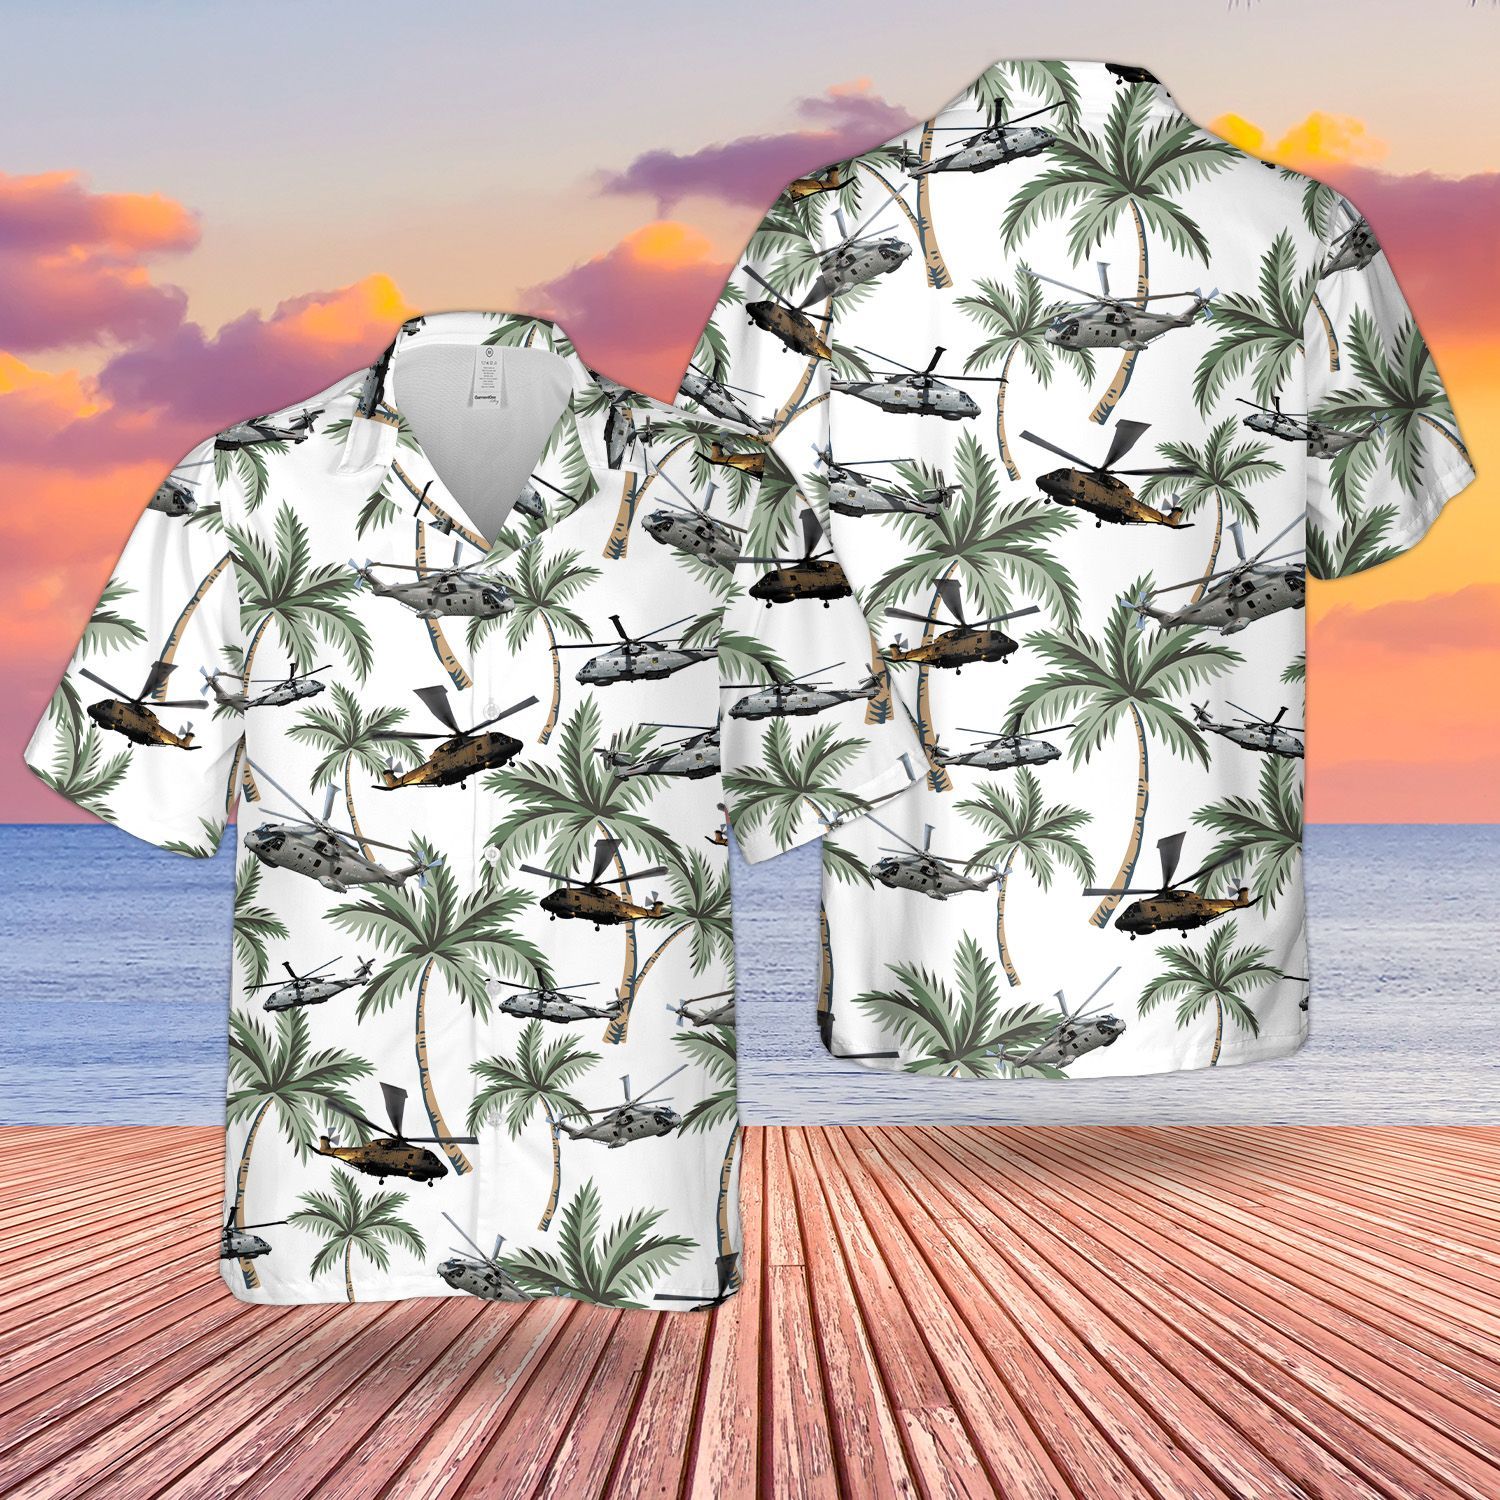 Enjoy your summer with top cool hawaiian shirt below 169